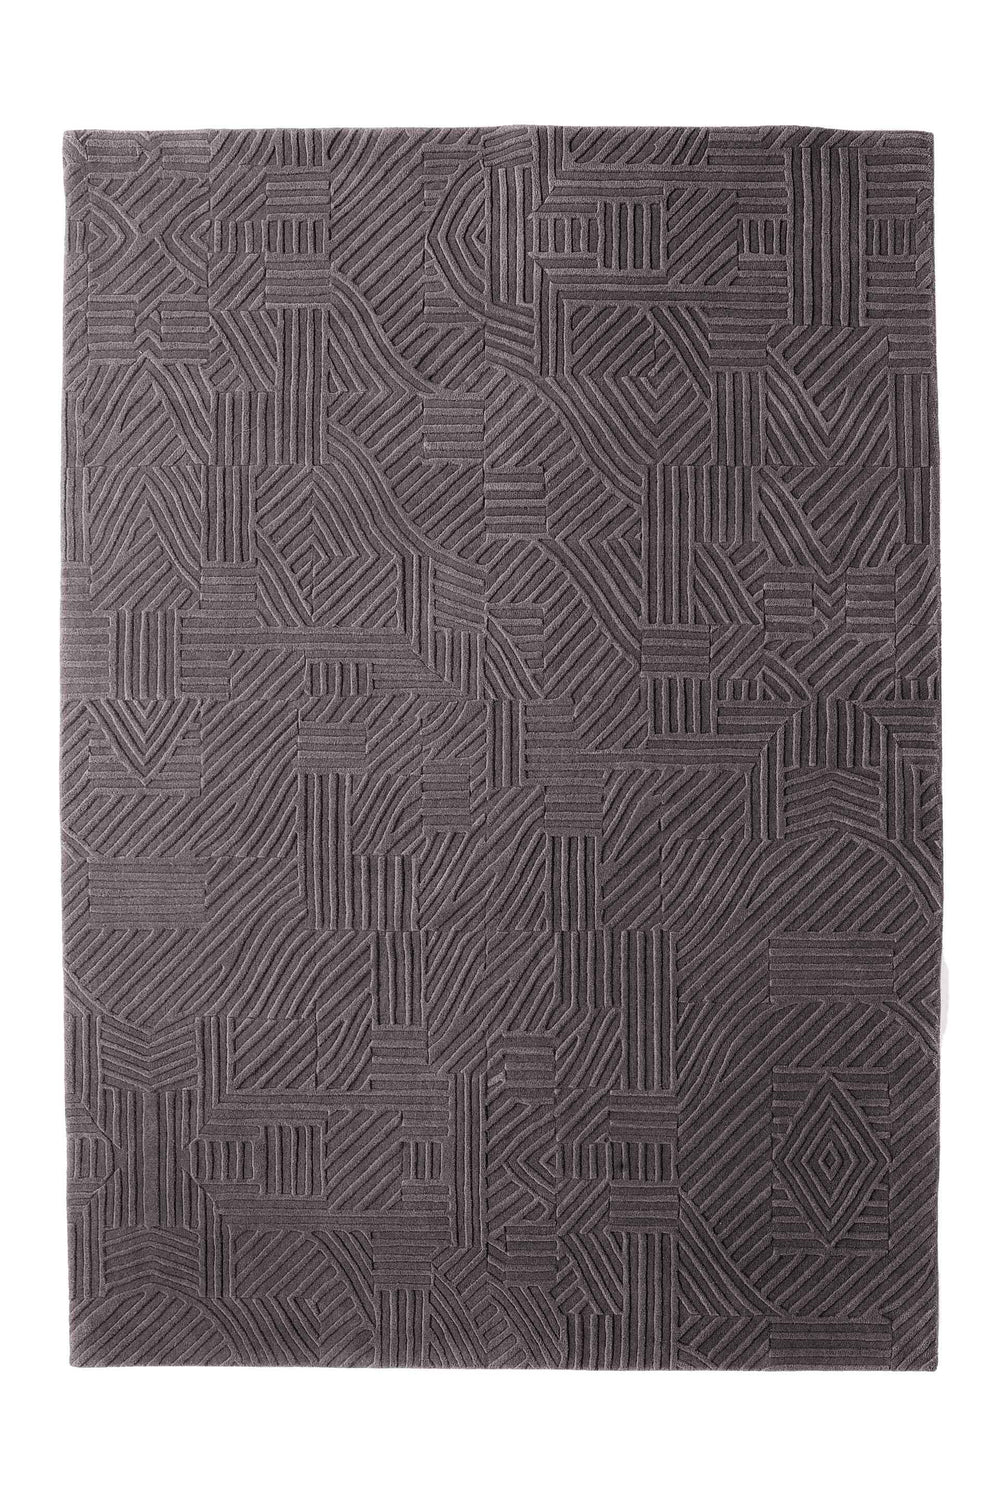 Milton Glaser African Pattern 2 Rug